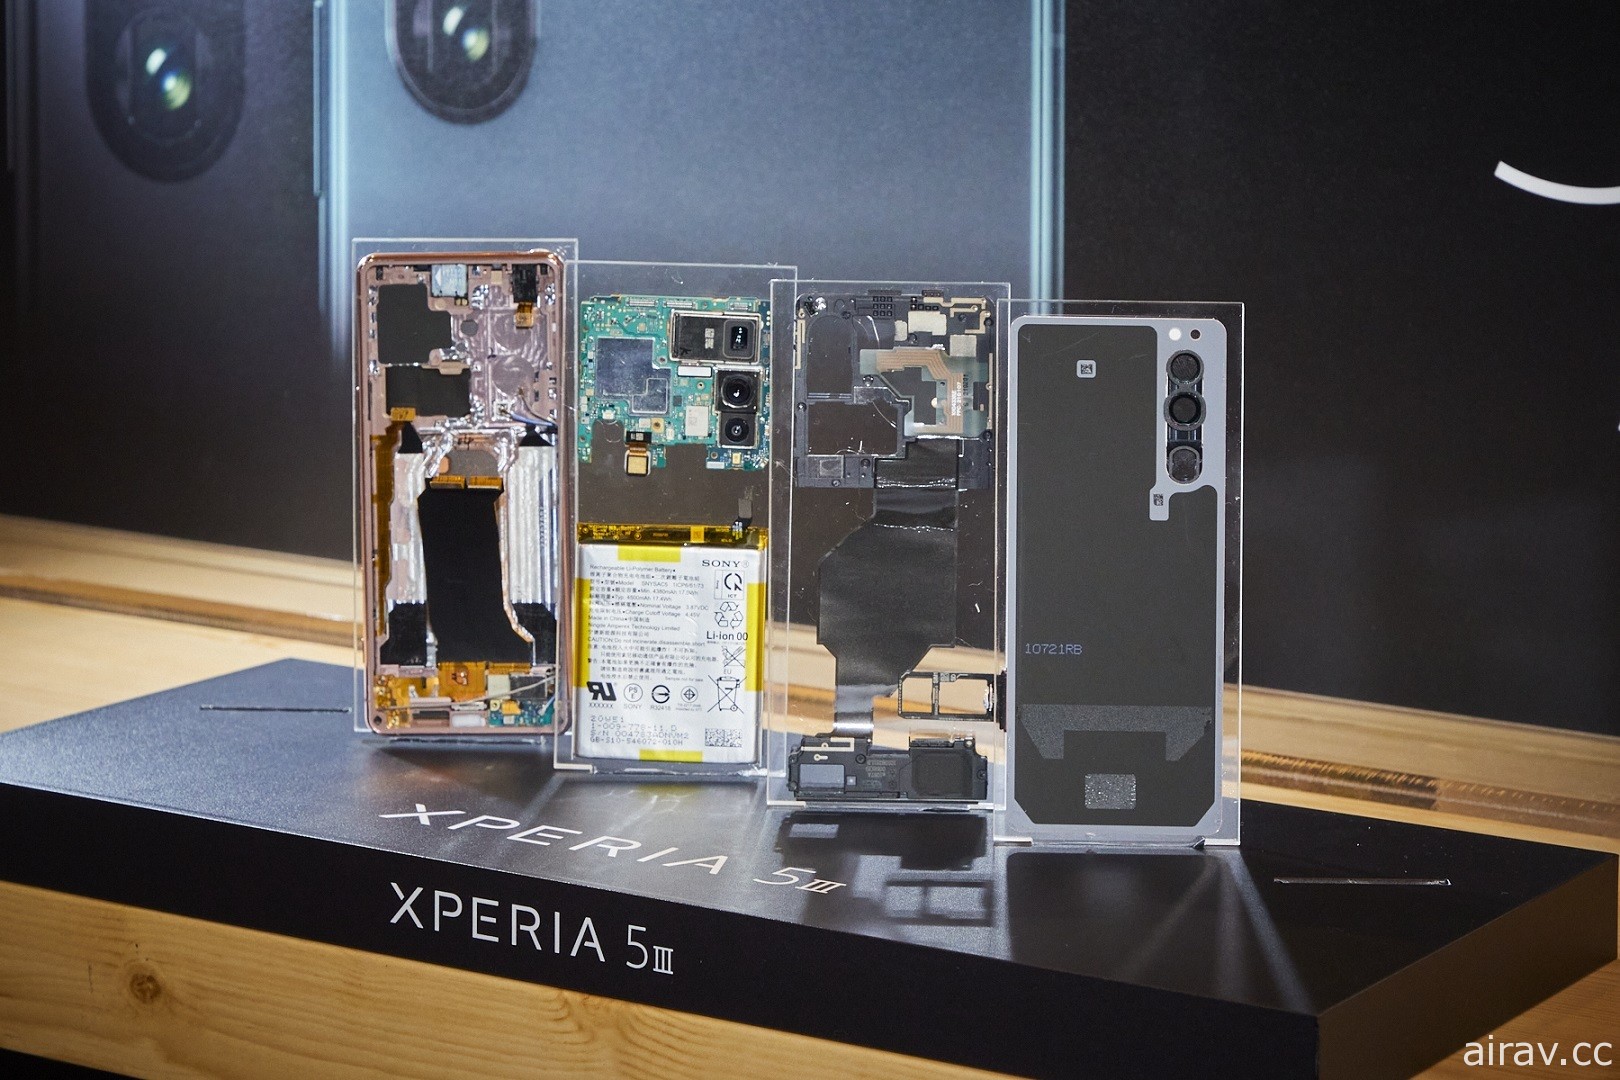 Sony Mobile 發表 Xperia 5 III 旗艦手機 預告 9 月 10 日開始預購